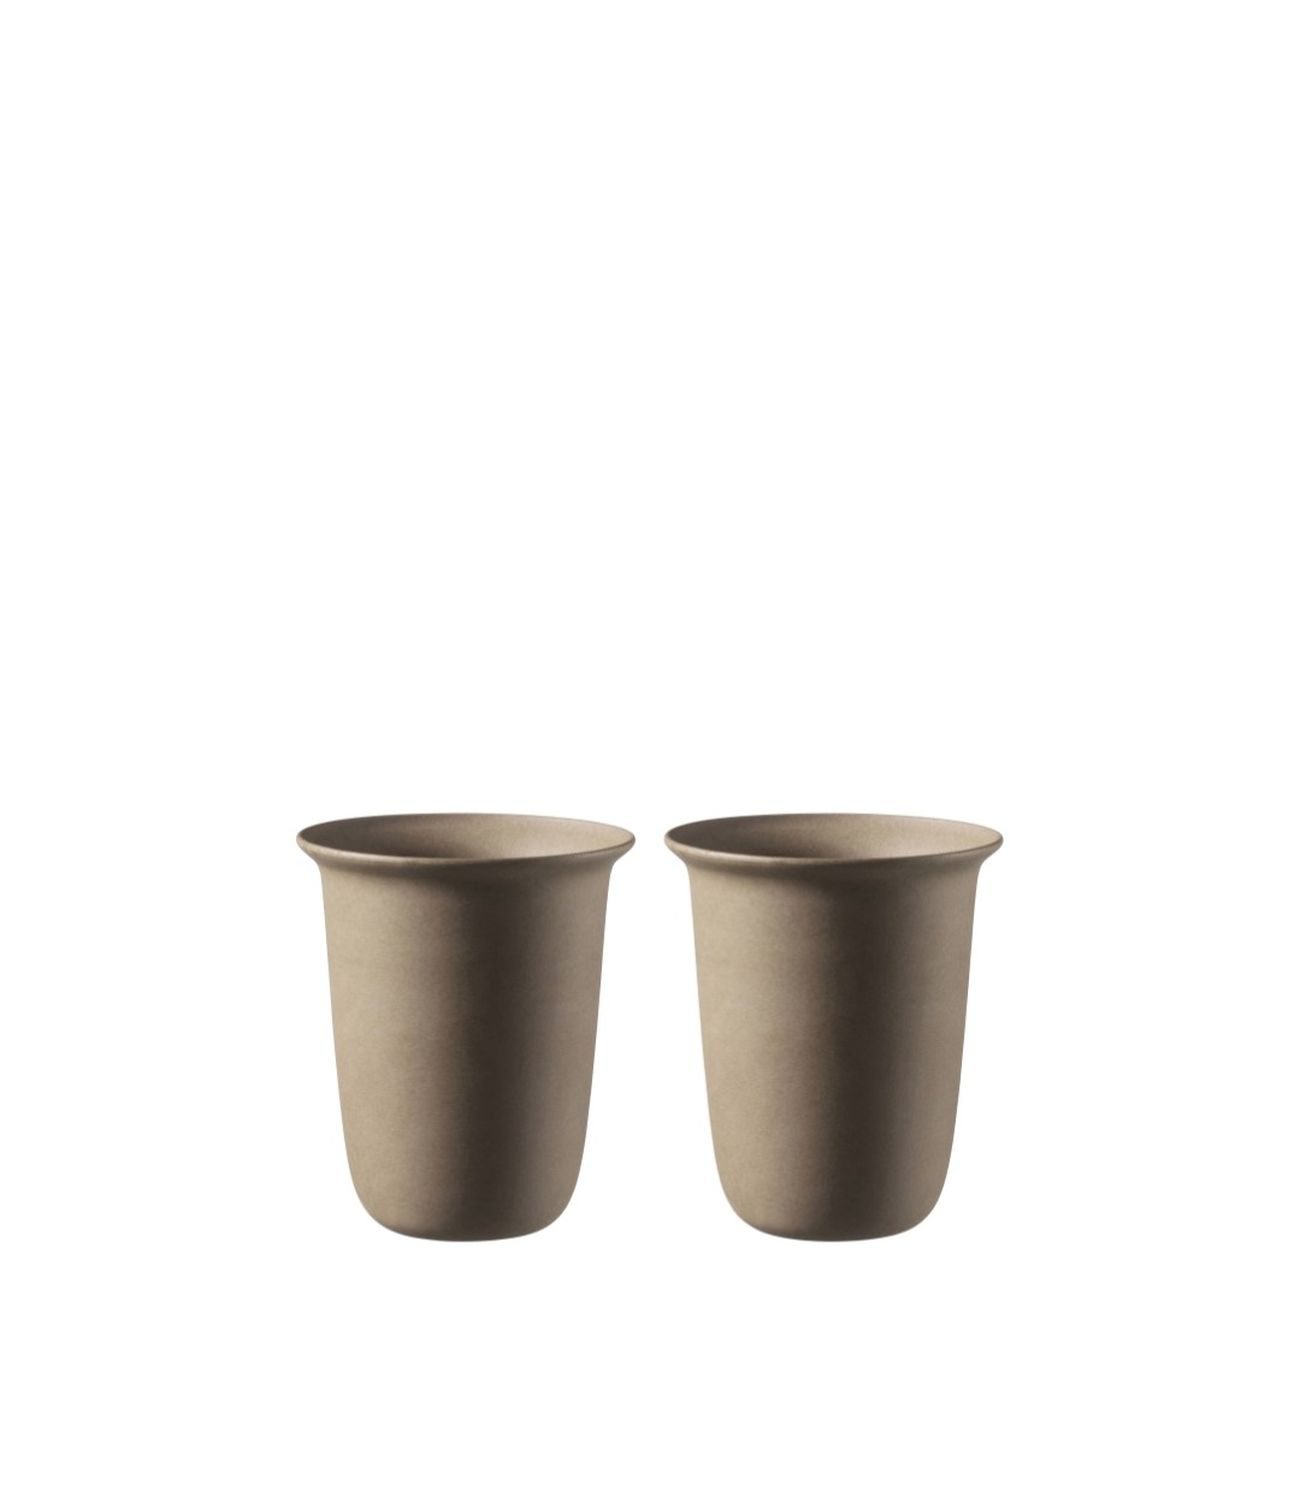 2x Ildpot Kaffeetasse Keramik Braun